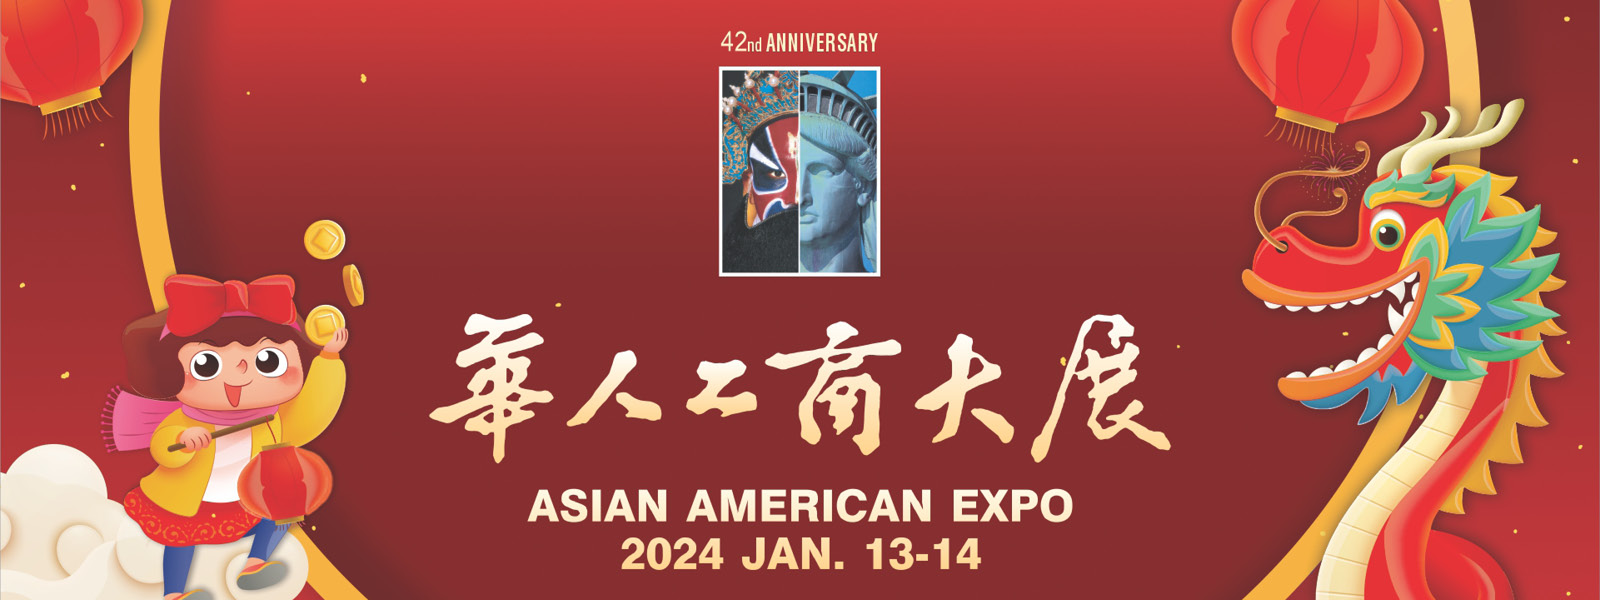 Asian American Expo Fairplex